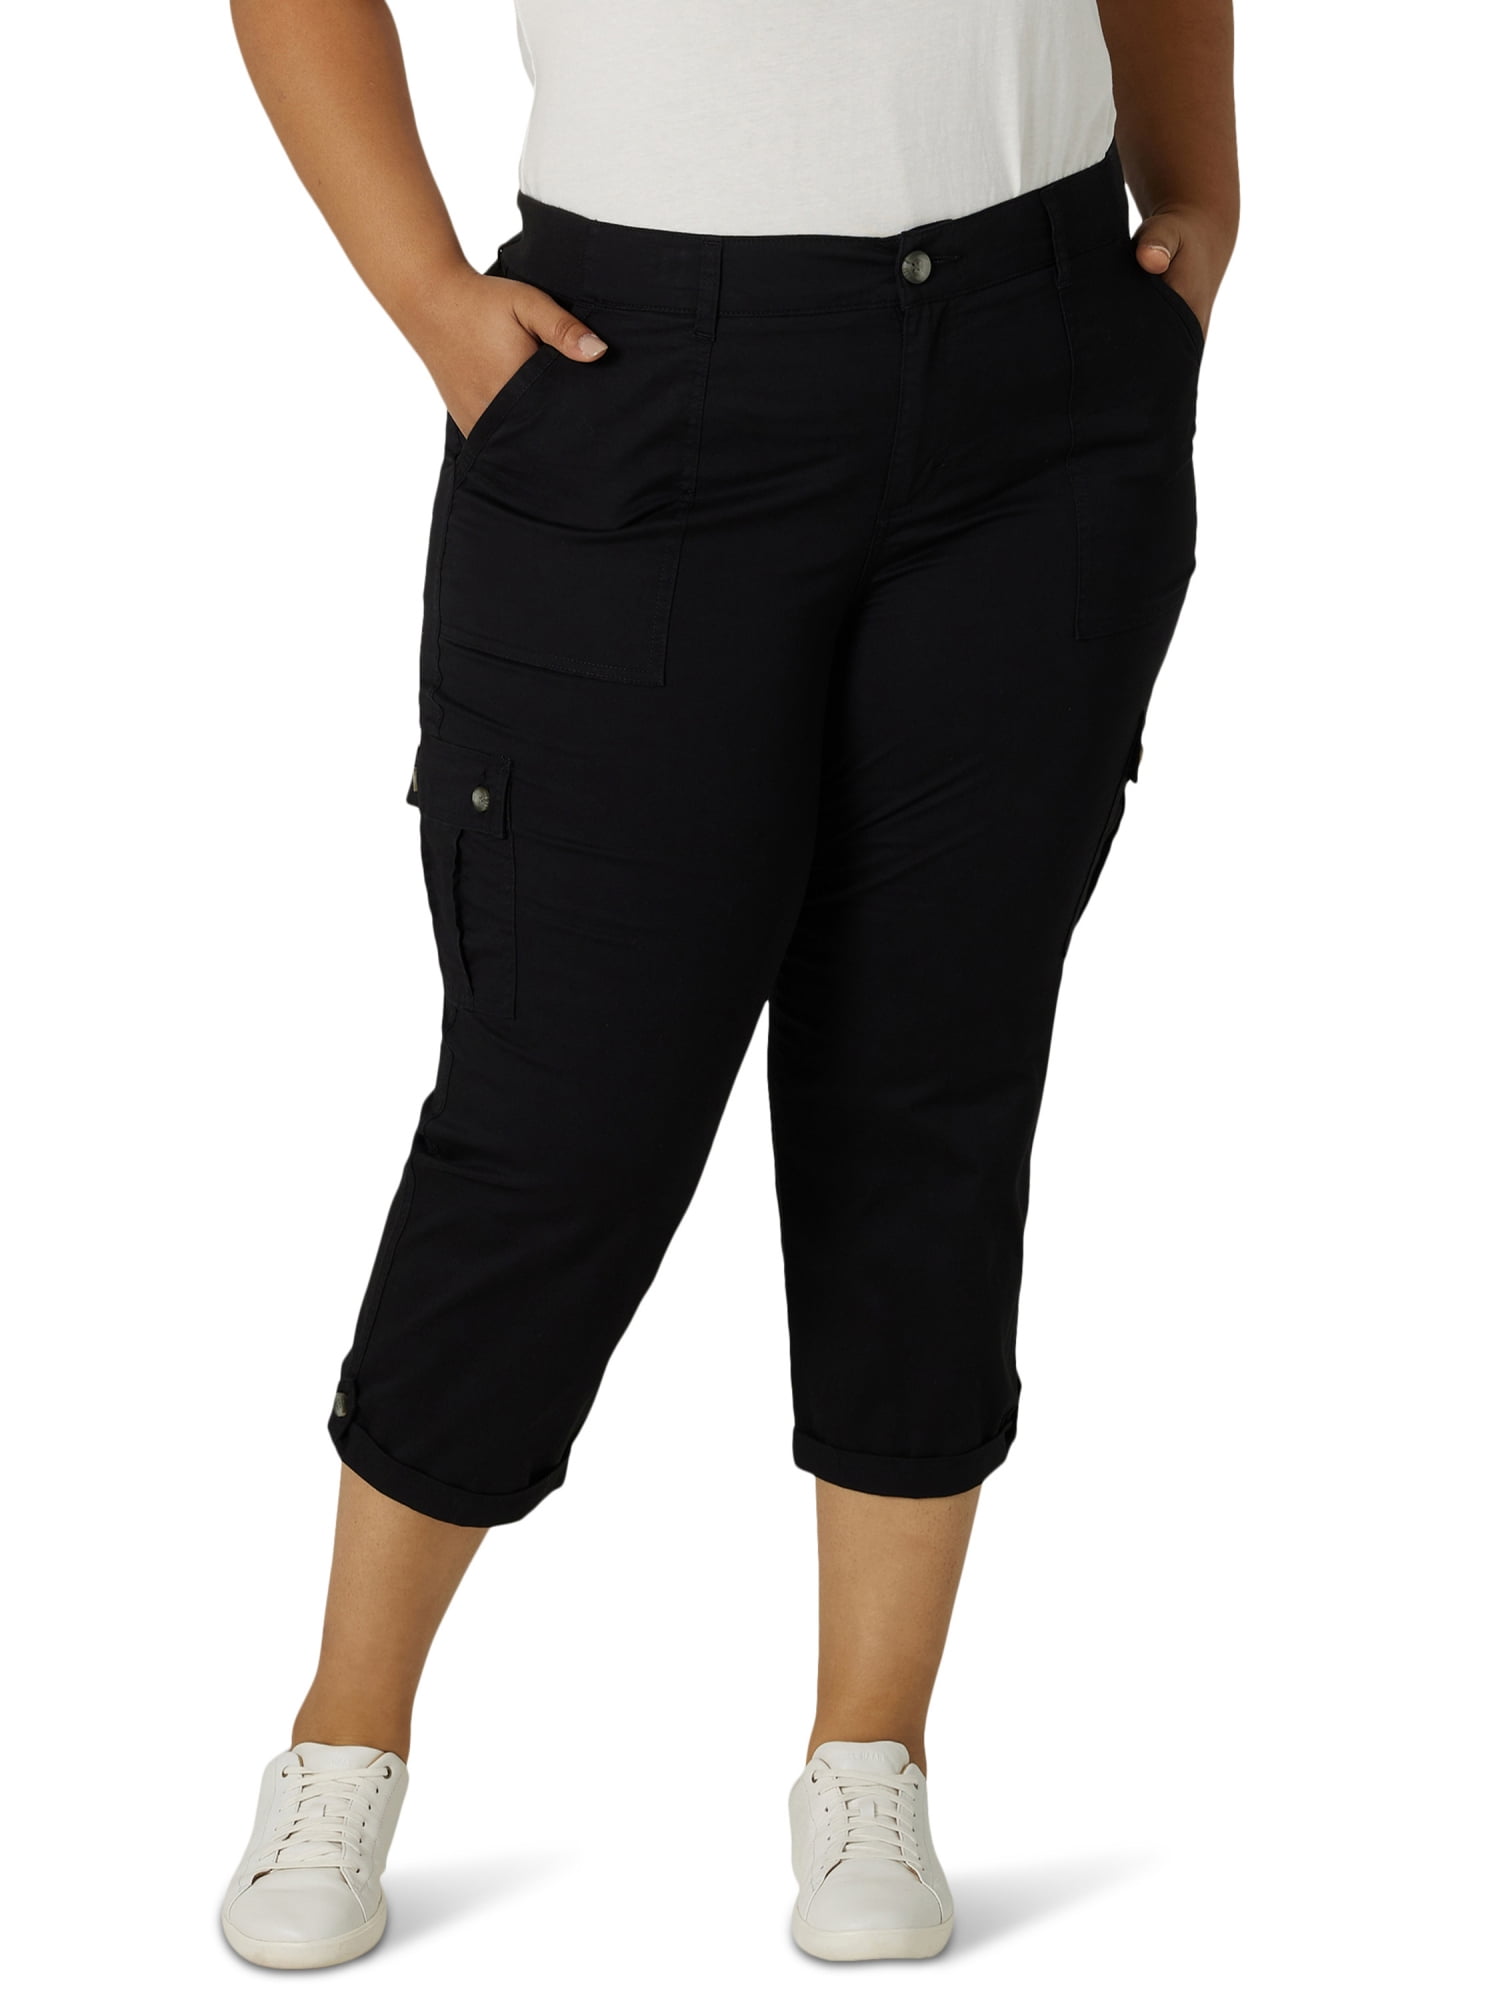 LEE Womens Plus Size Flex-to-go Relaxed Fit Utility Bermuda Short Black 24W Medium 